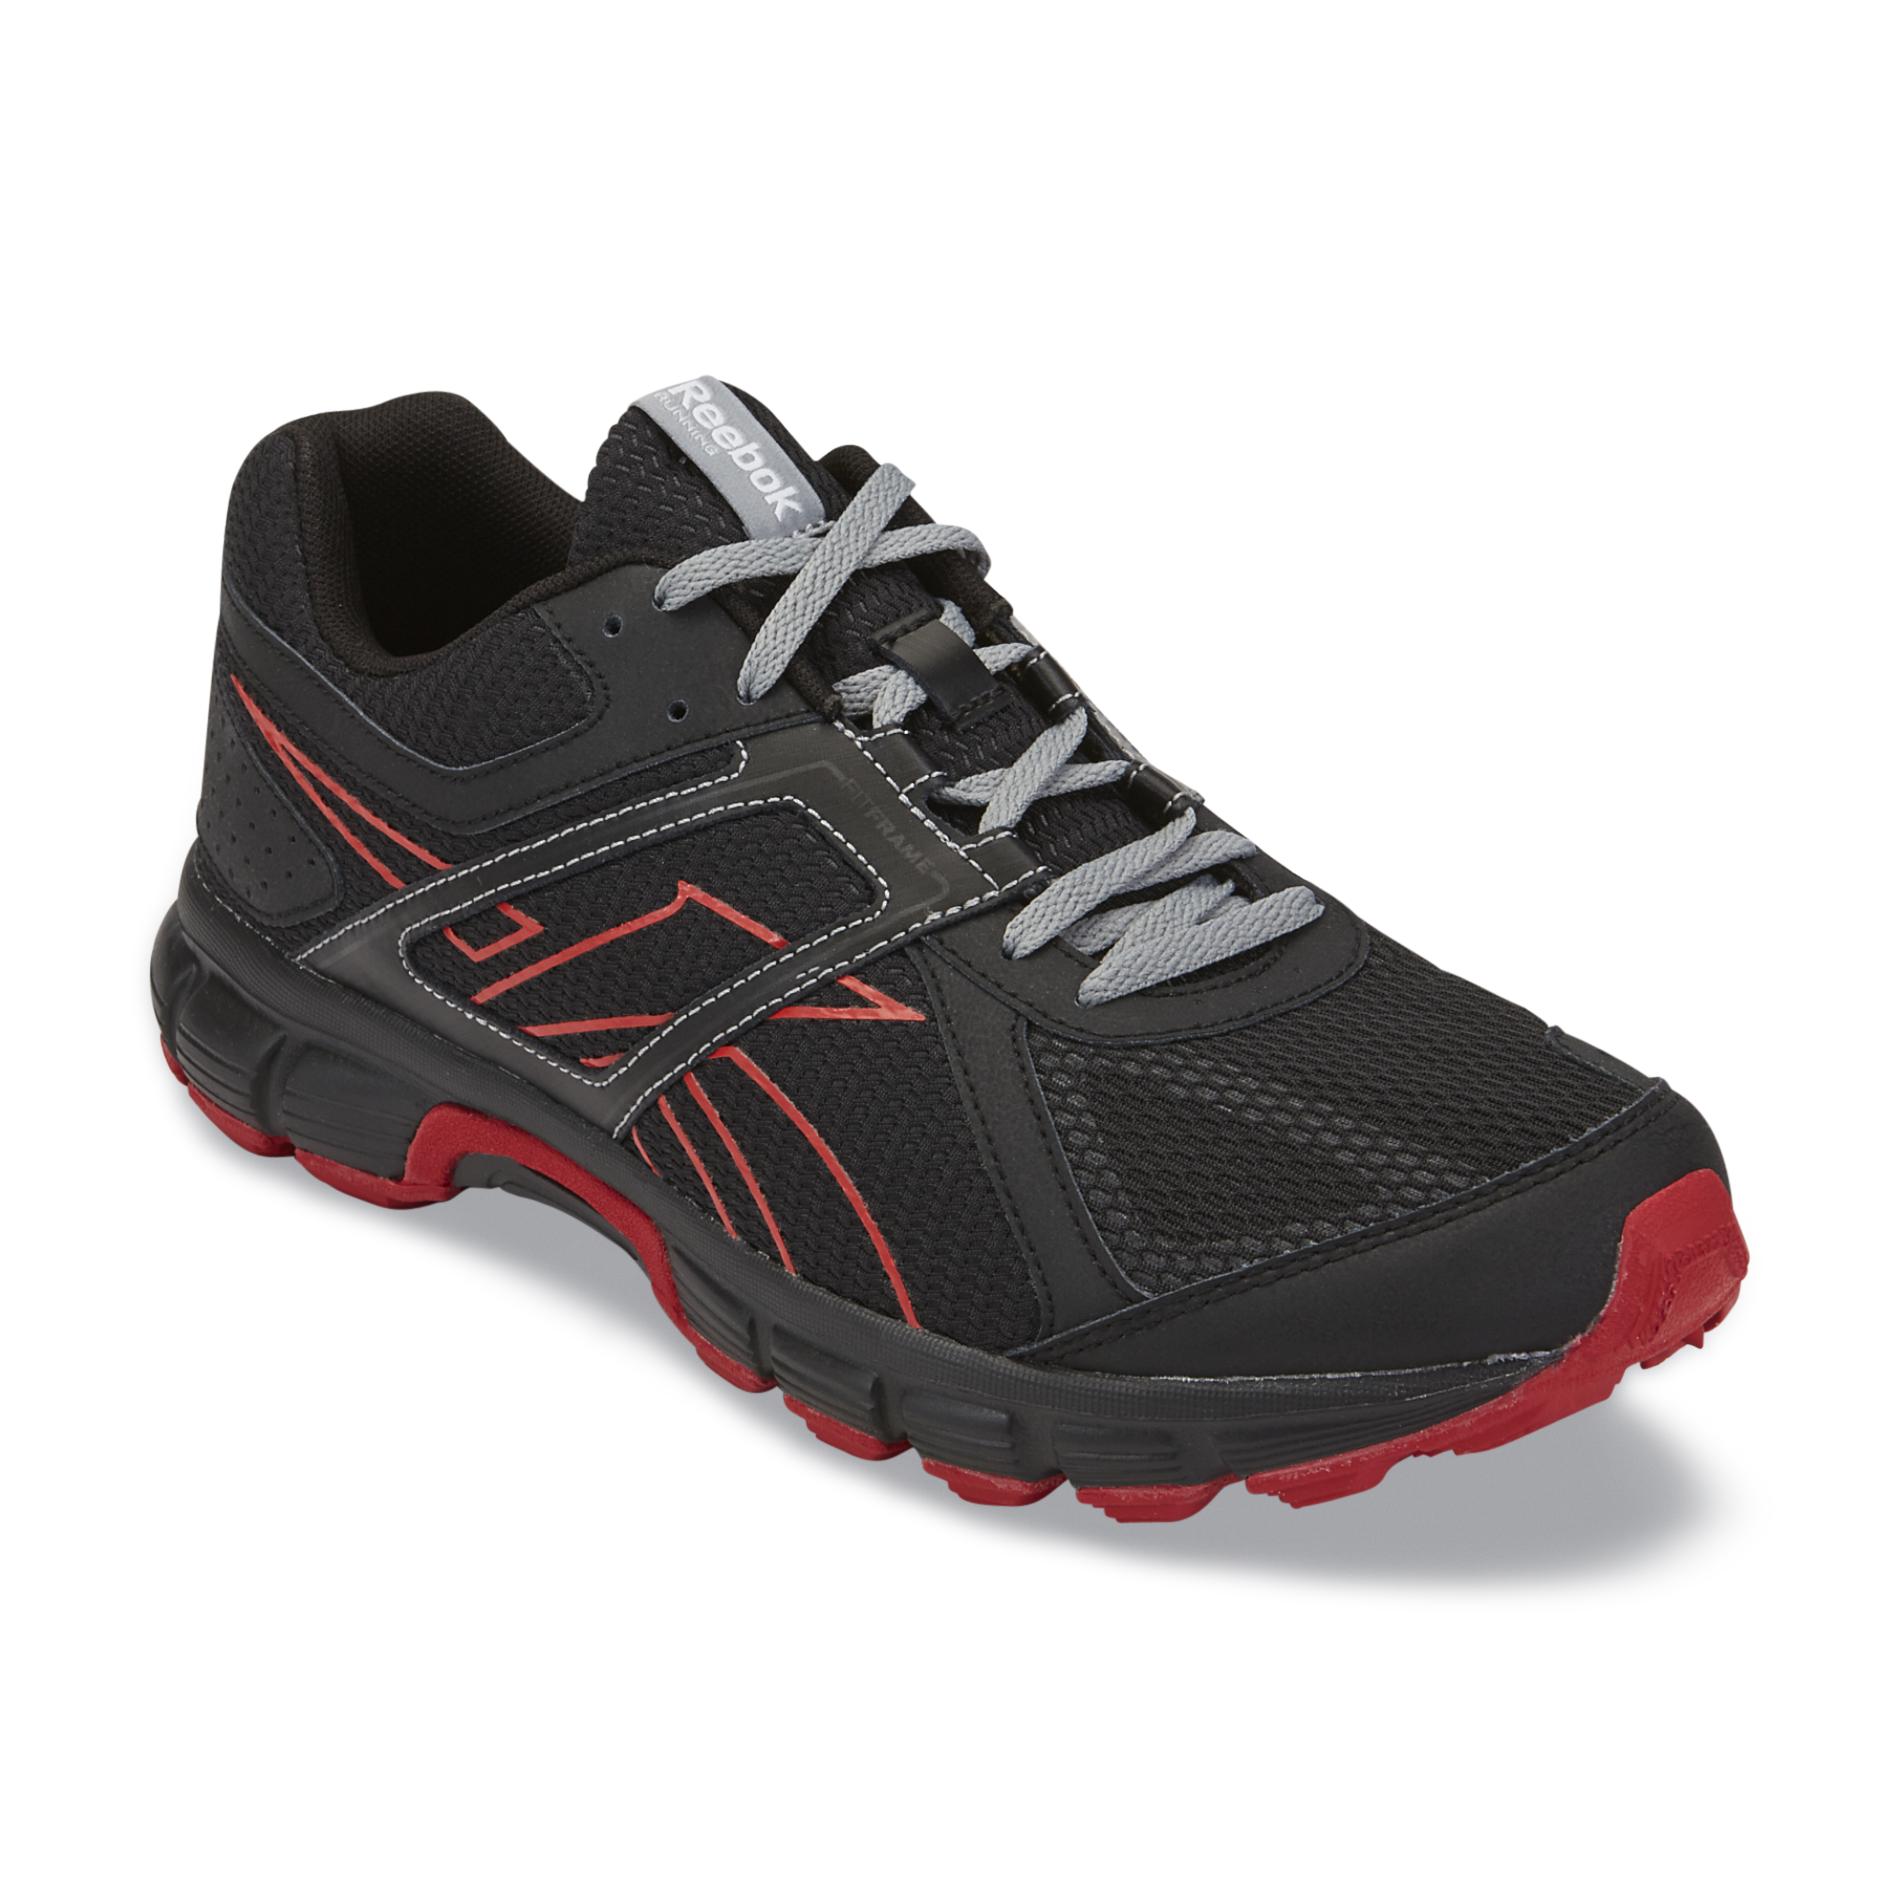 Reebok Men's Record Finish Trail Running Athletic Shoe - Black/Red